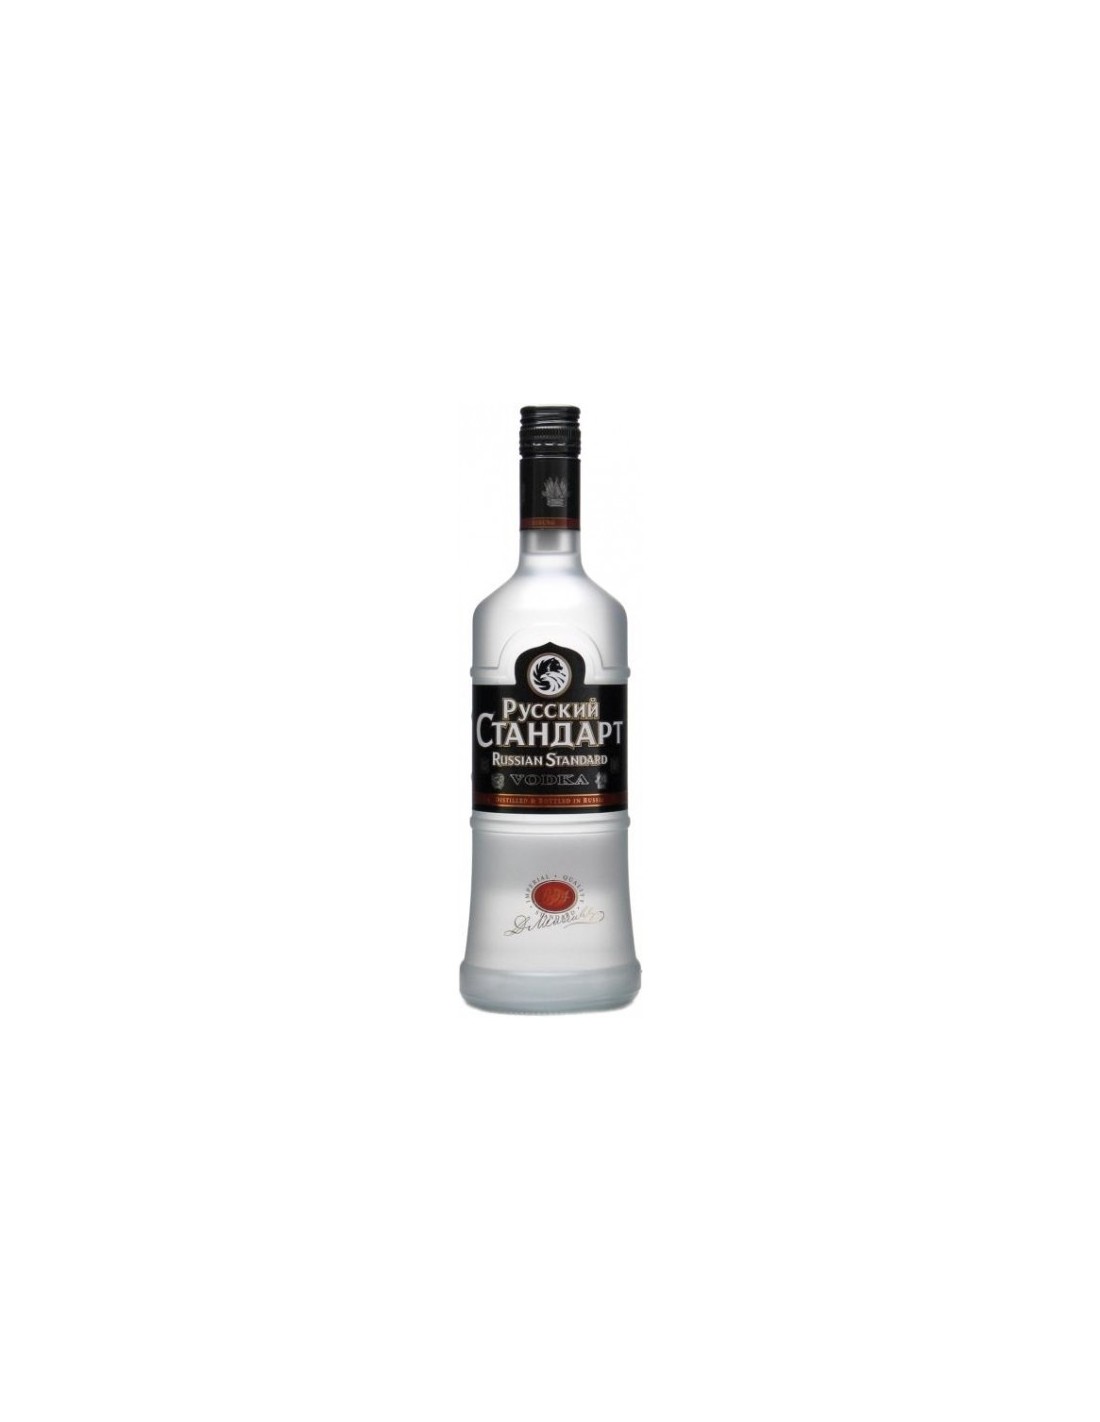 Vodca Russian Standard Original 1L, 40% alc., Rusia alcooldiscount.ro